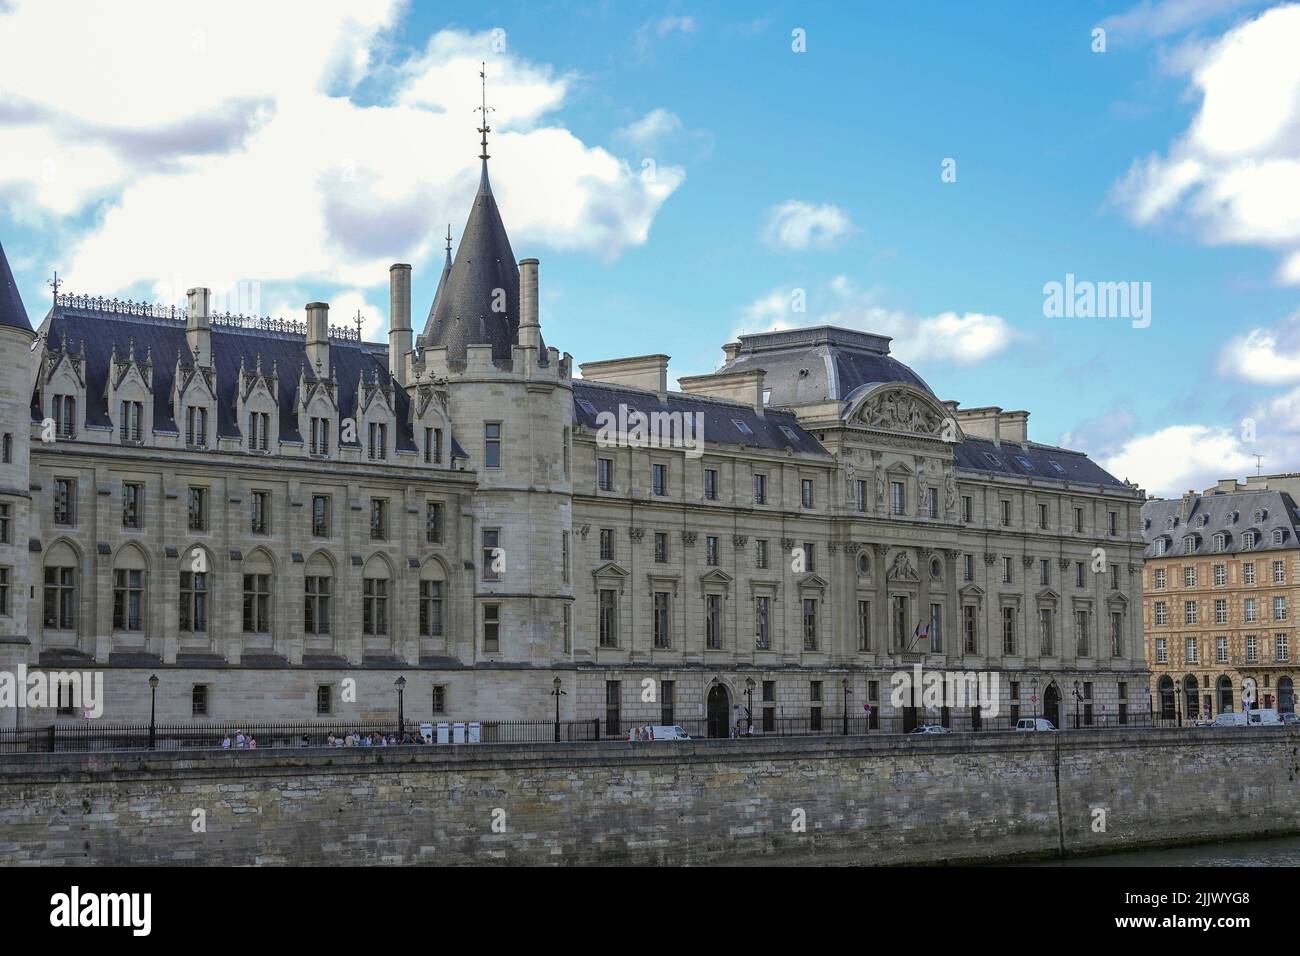 France, Paris, Court of Cassation building   Photo © Fabio Mazzarella/Sintesi/Alamy Stock Photo Stock Photo